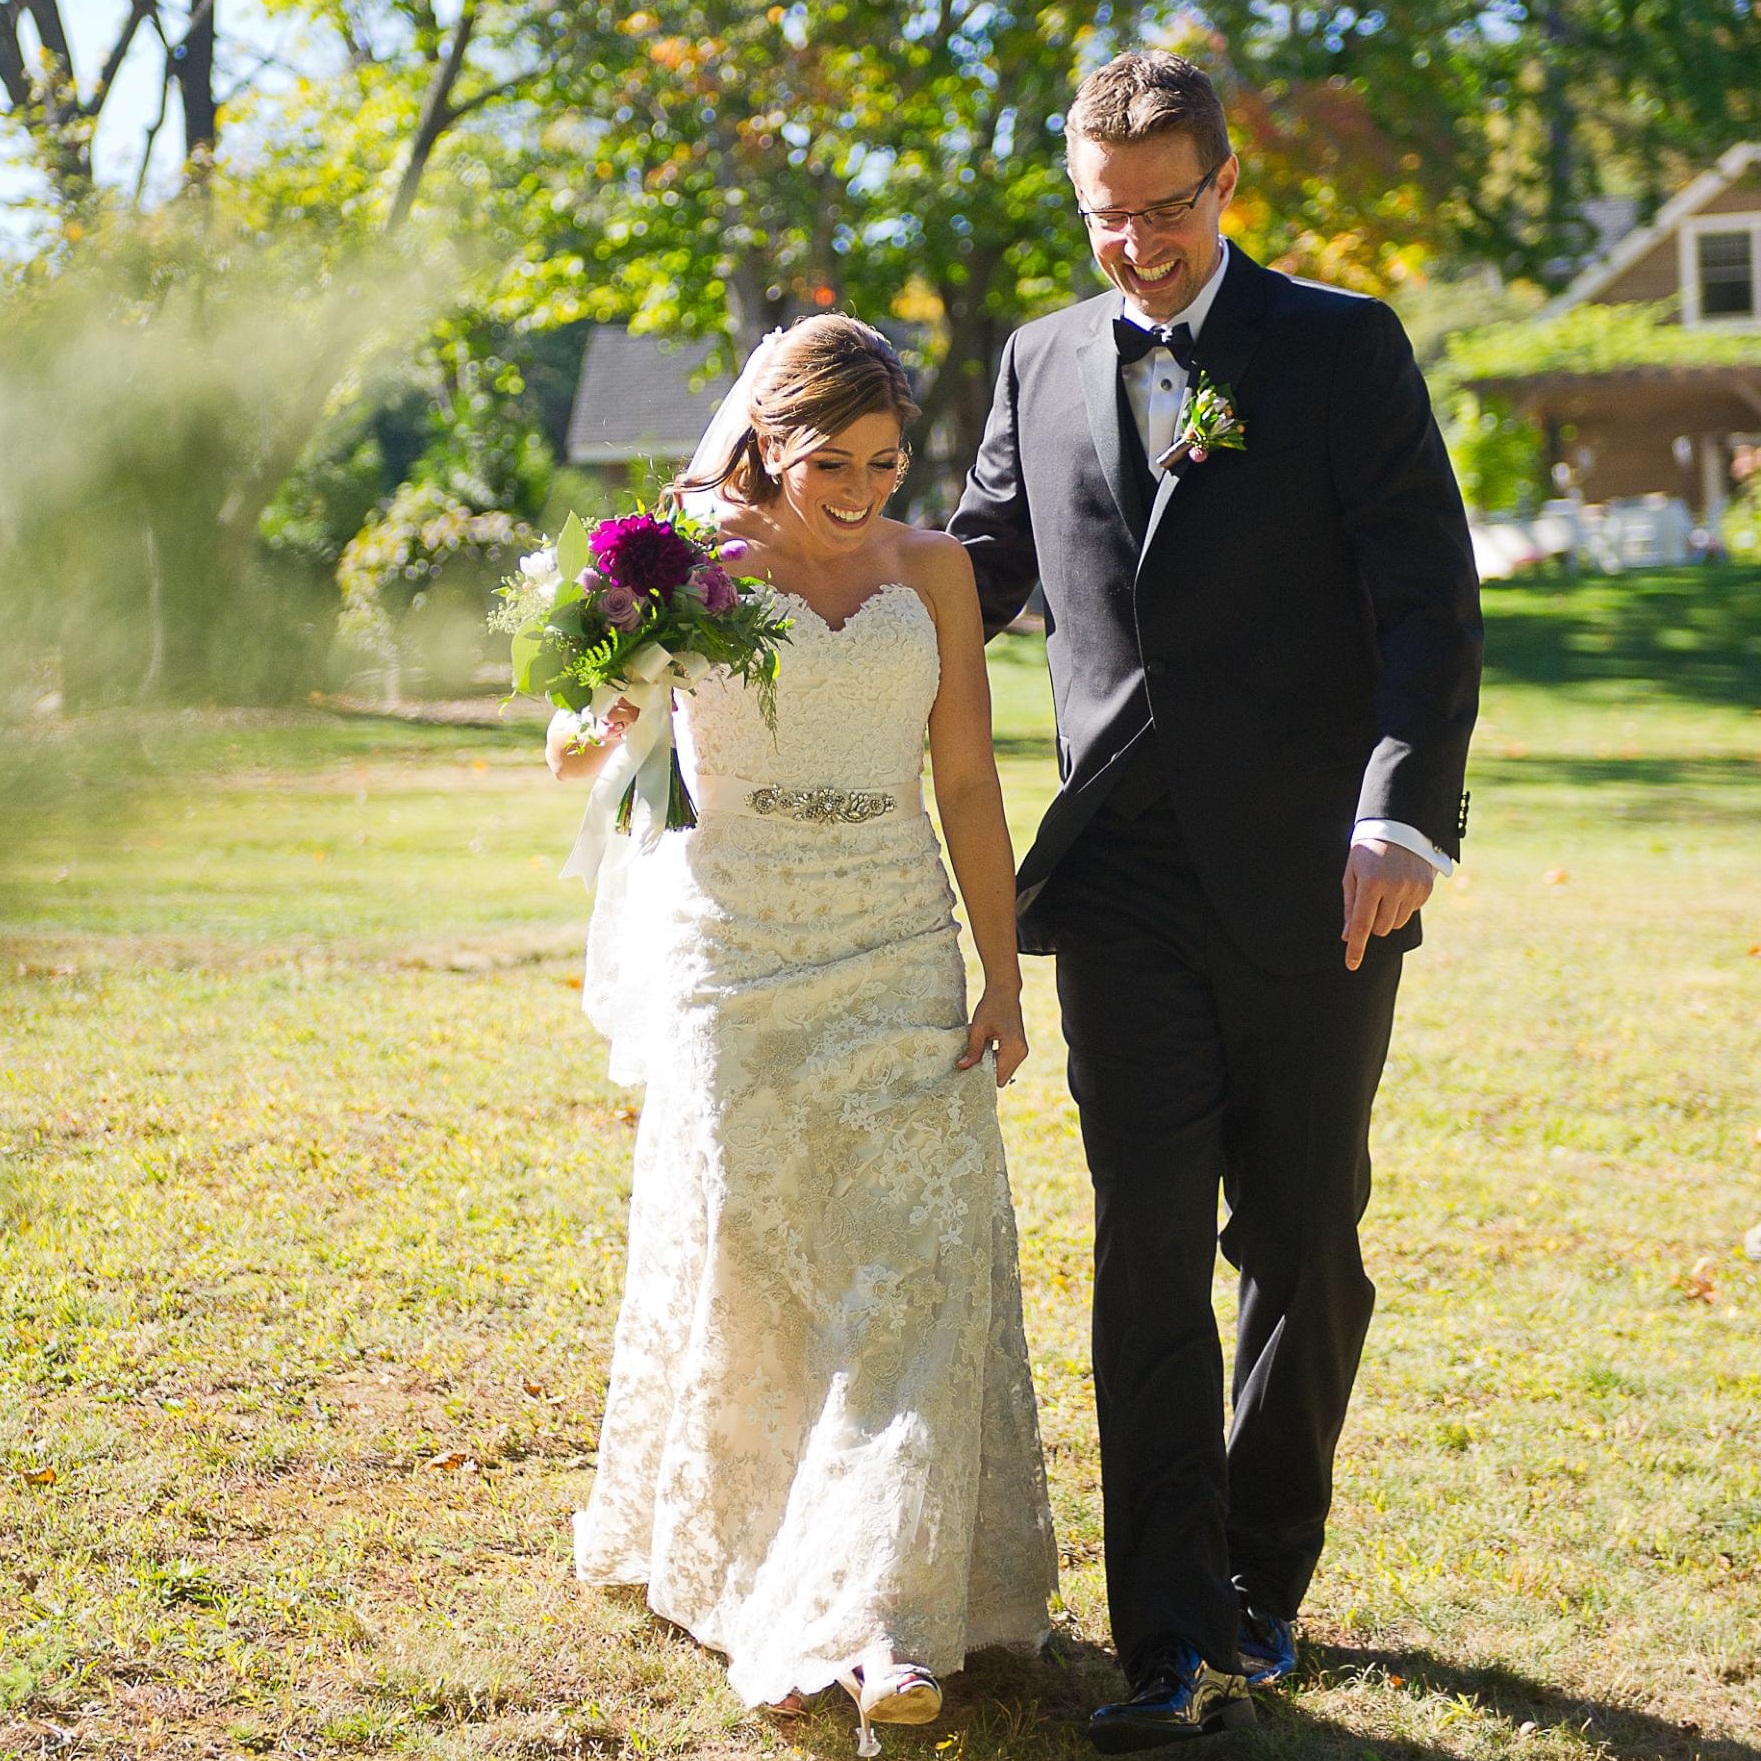 1116498 1 - Hudson Valley Wedding Video: A Beautiful Backyard Fête